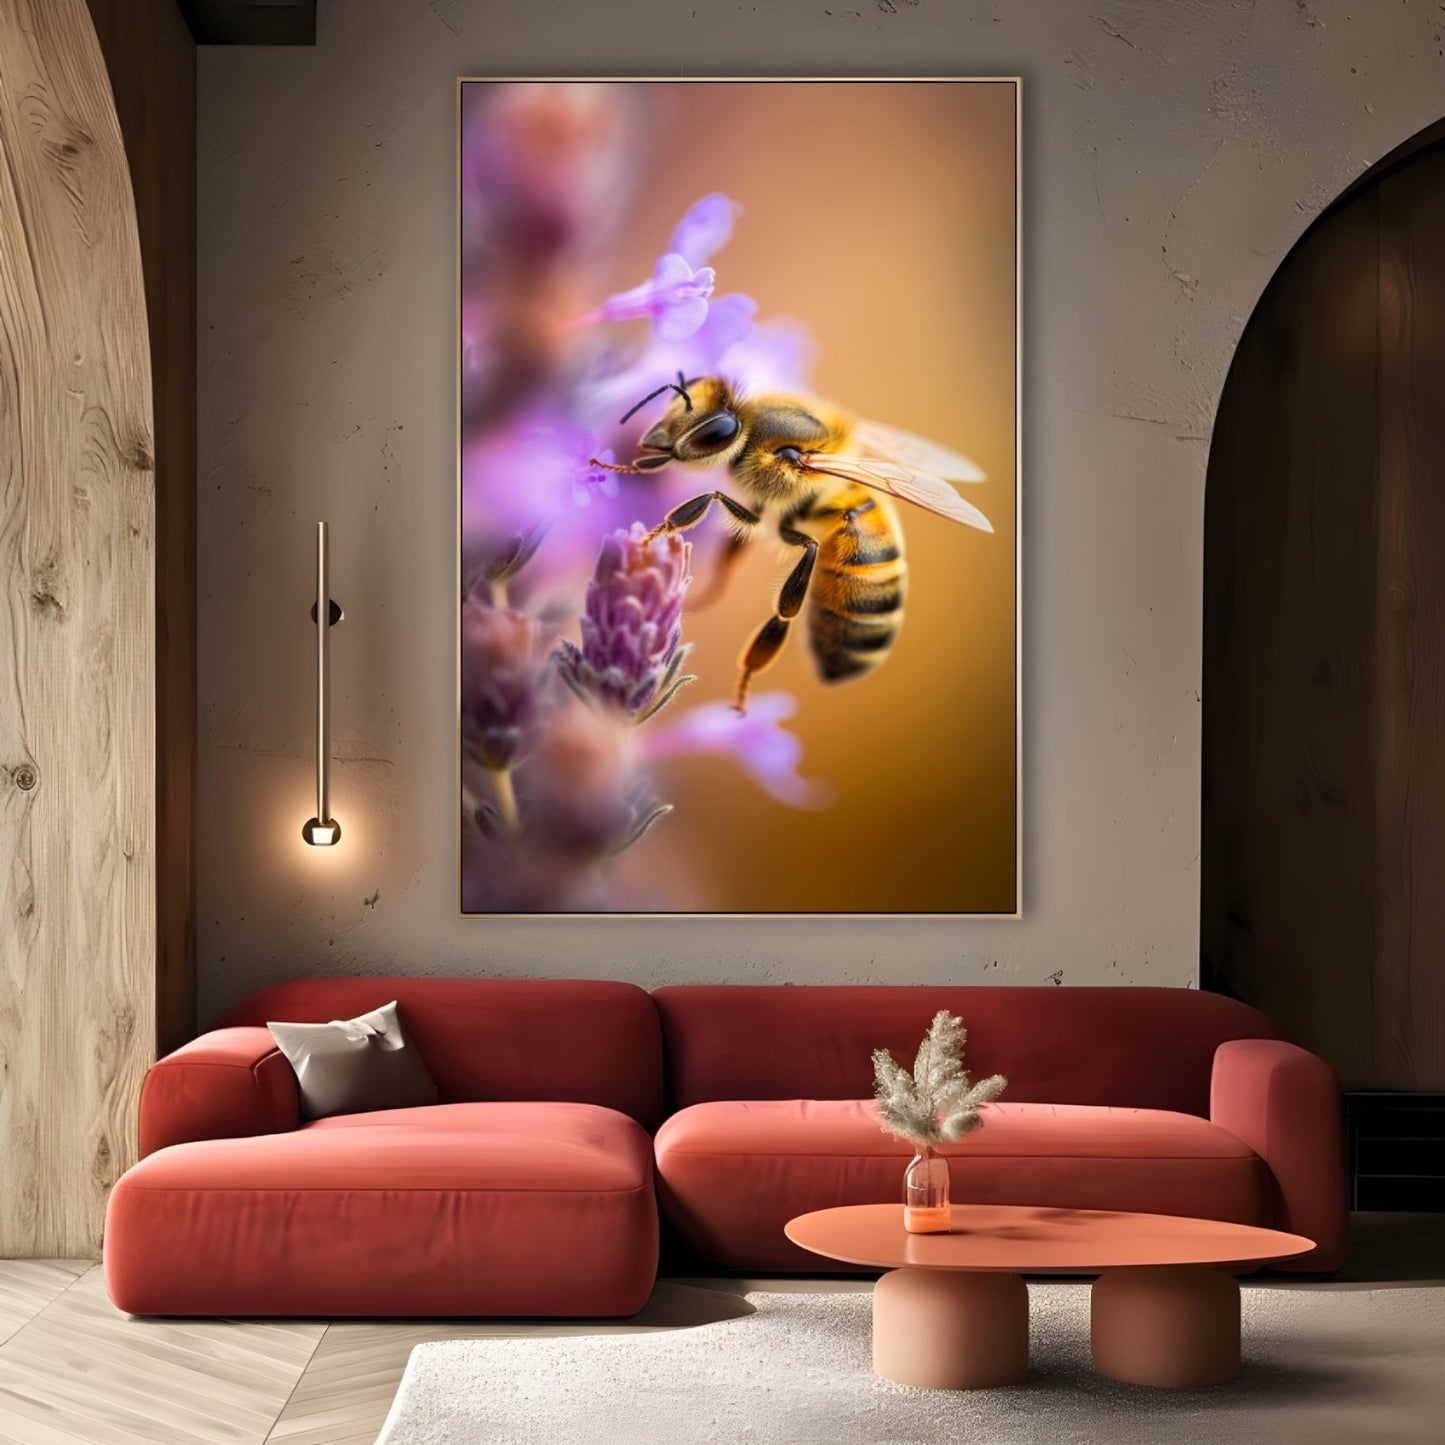 Bee among the petals